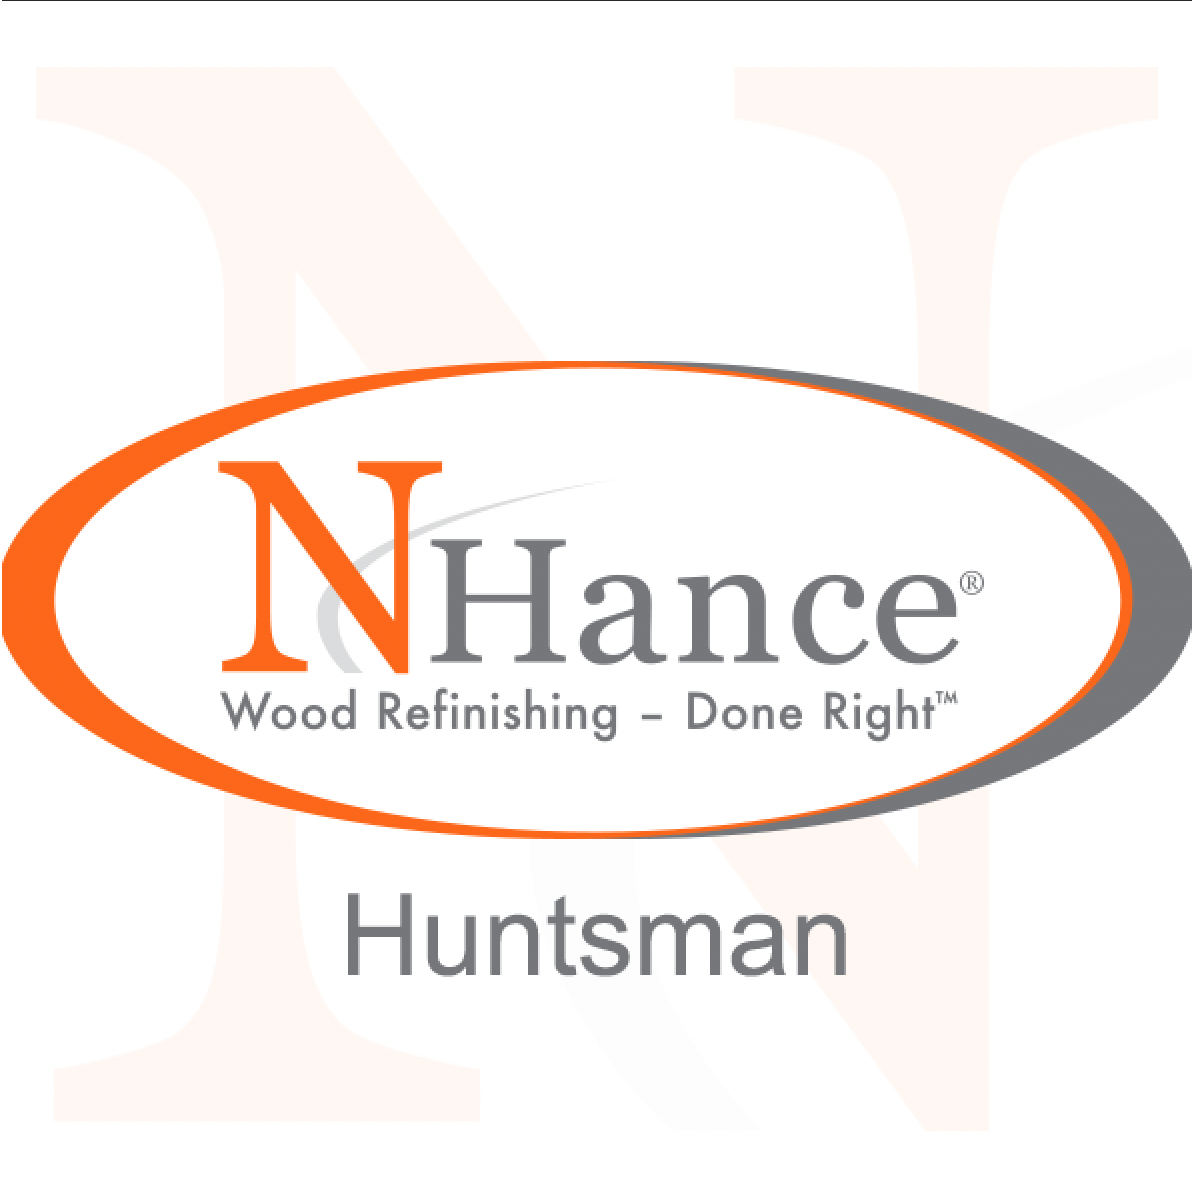 N-Hance Wood Refinishing of Huntsman - Layton, UT 84041 - (801)399-9663 | ShowMeLocal.com